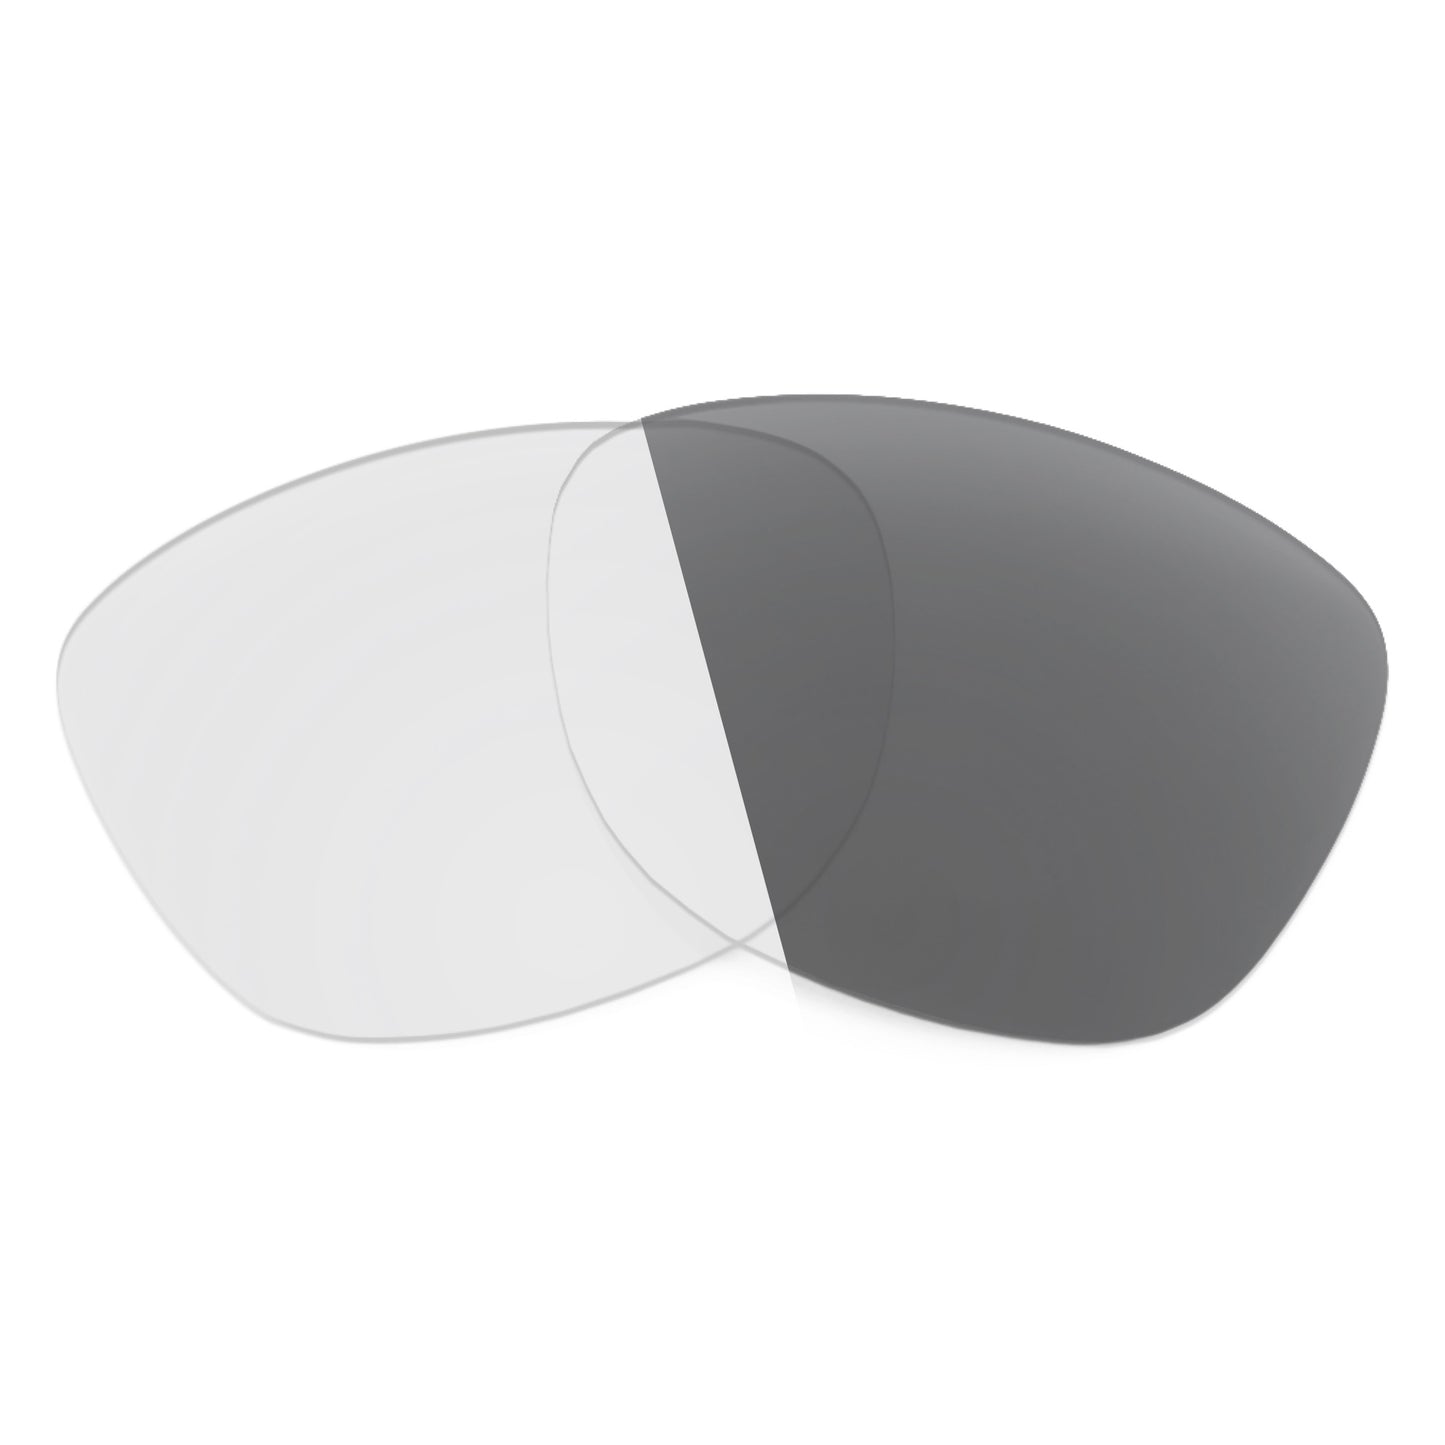 Revant replacement lenses for Electric Swingarm Non-Polarized Adapt Gray Photochromic